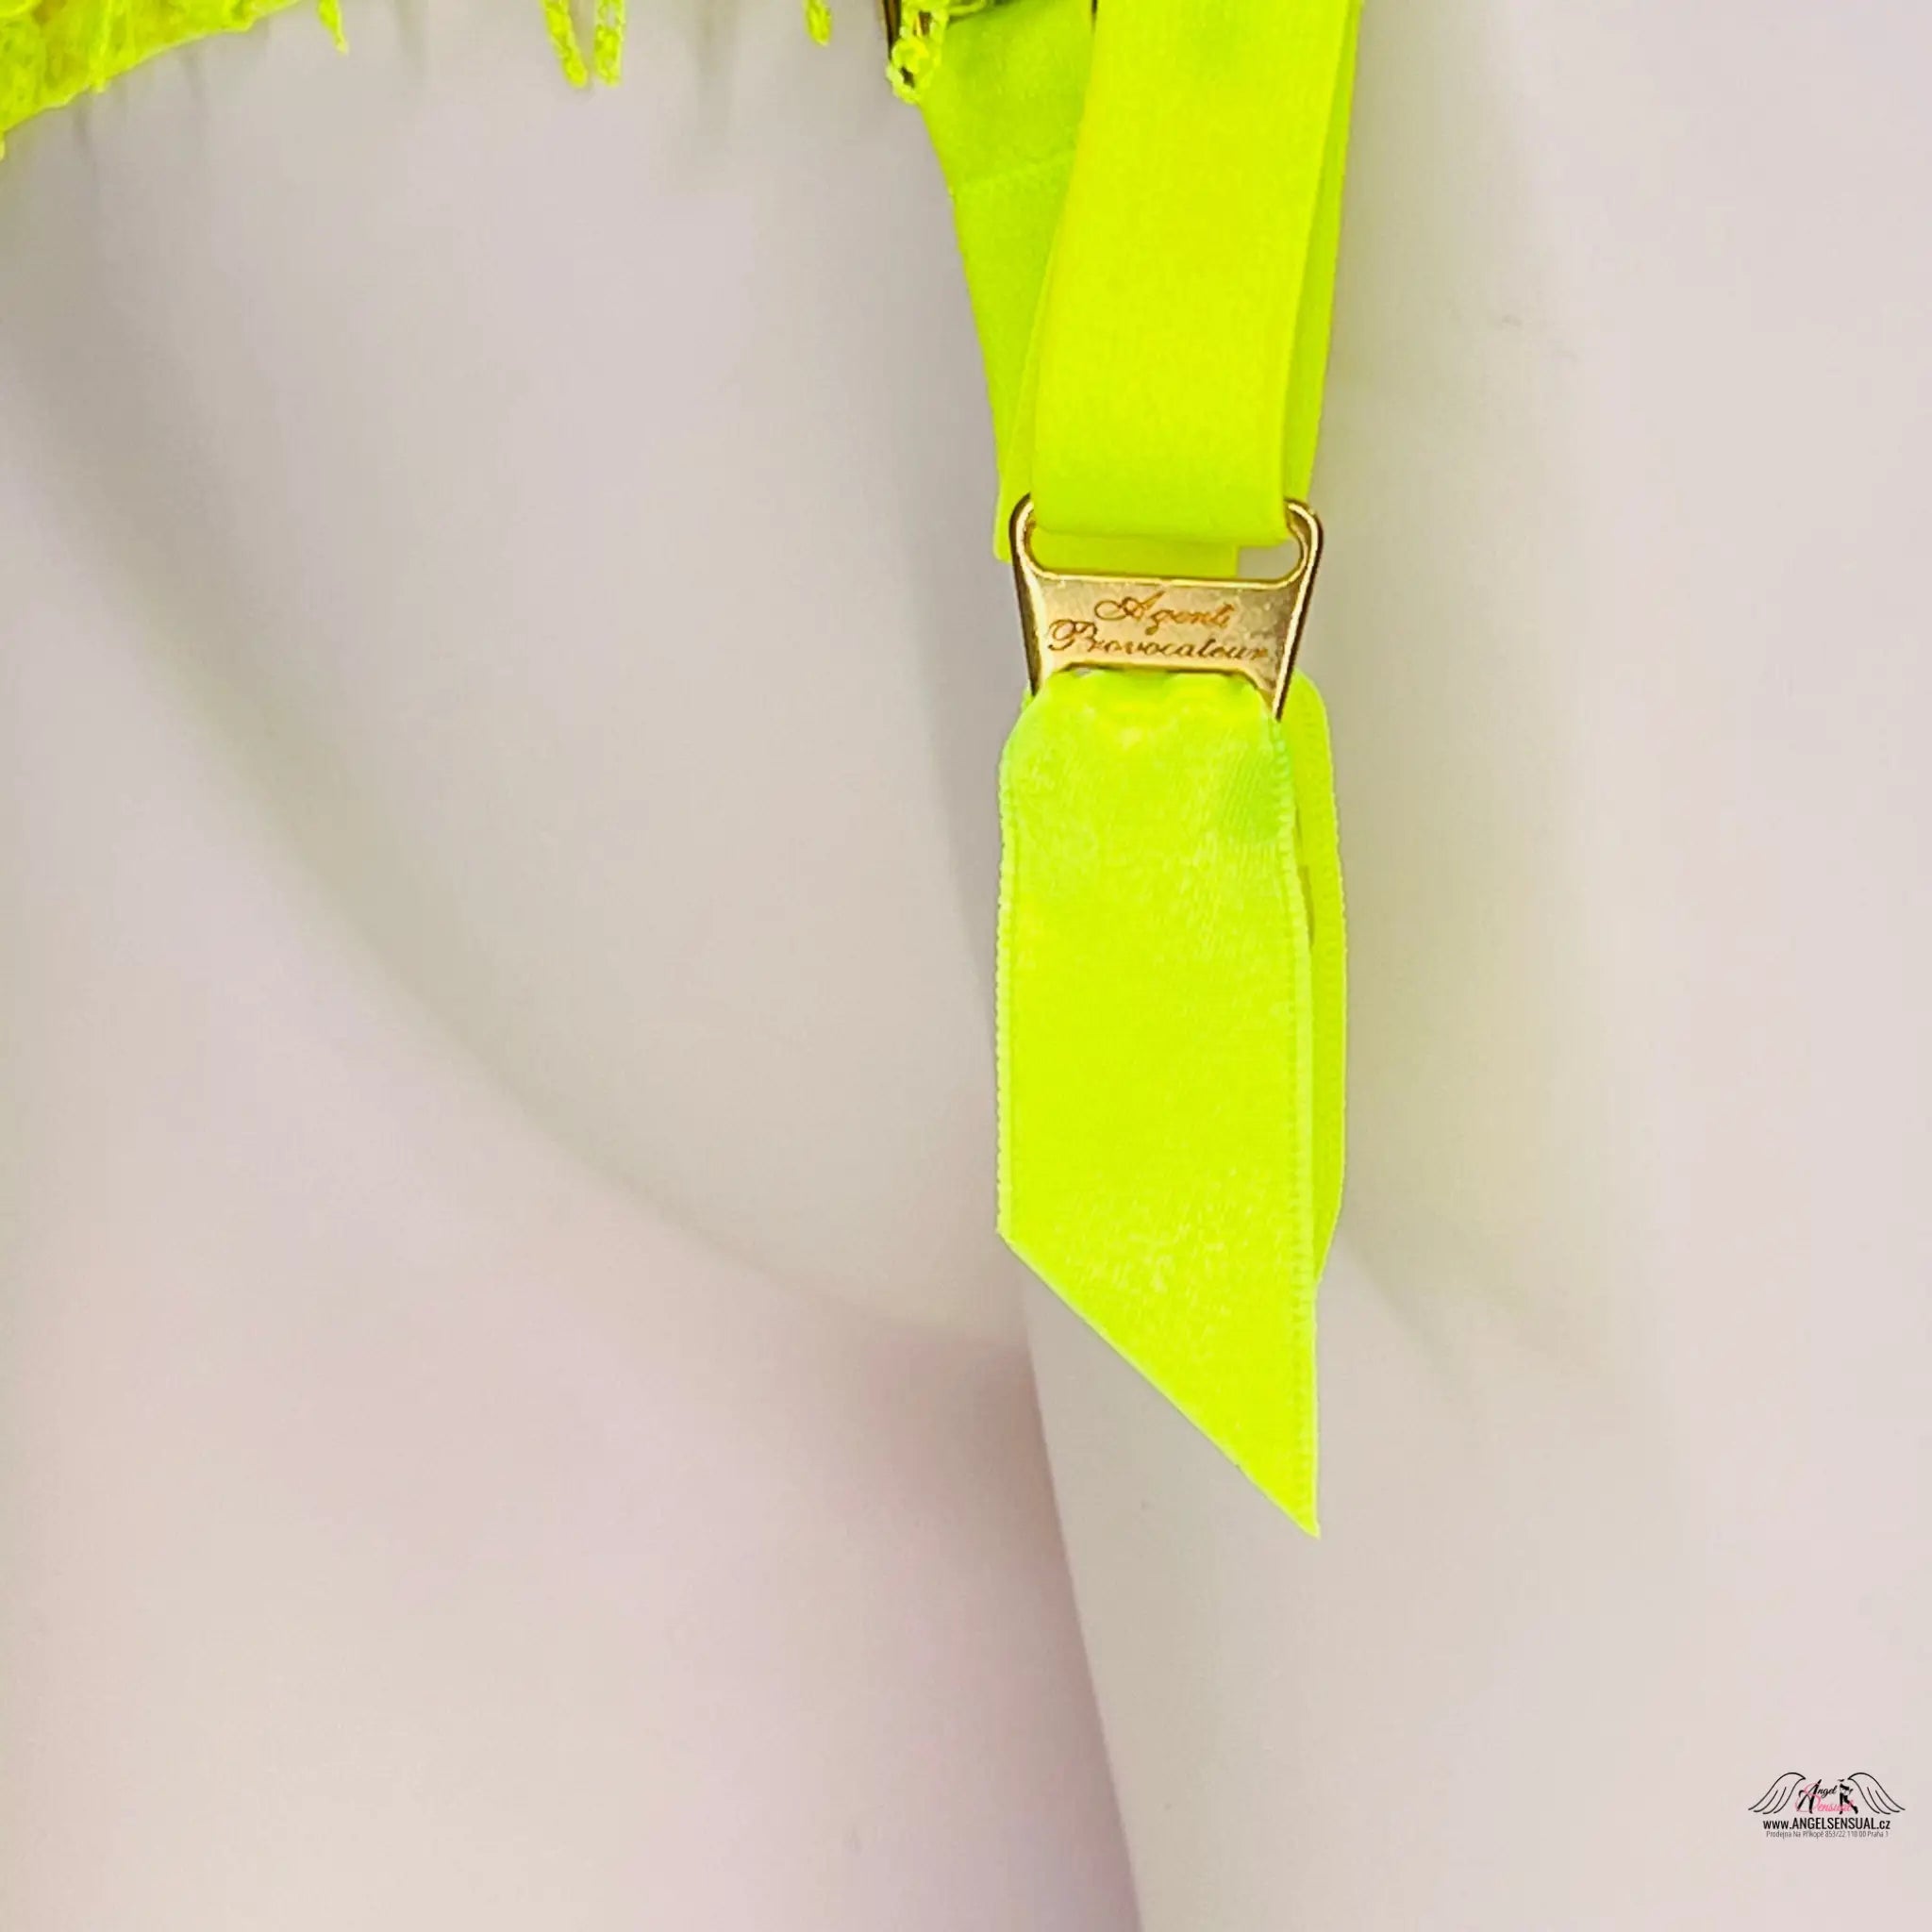 Axis Suspender Lime Yellow - L / Limetkově žlutá / Nové se štítky - Podvazkový pás Agent Provocateur